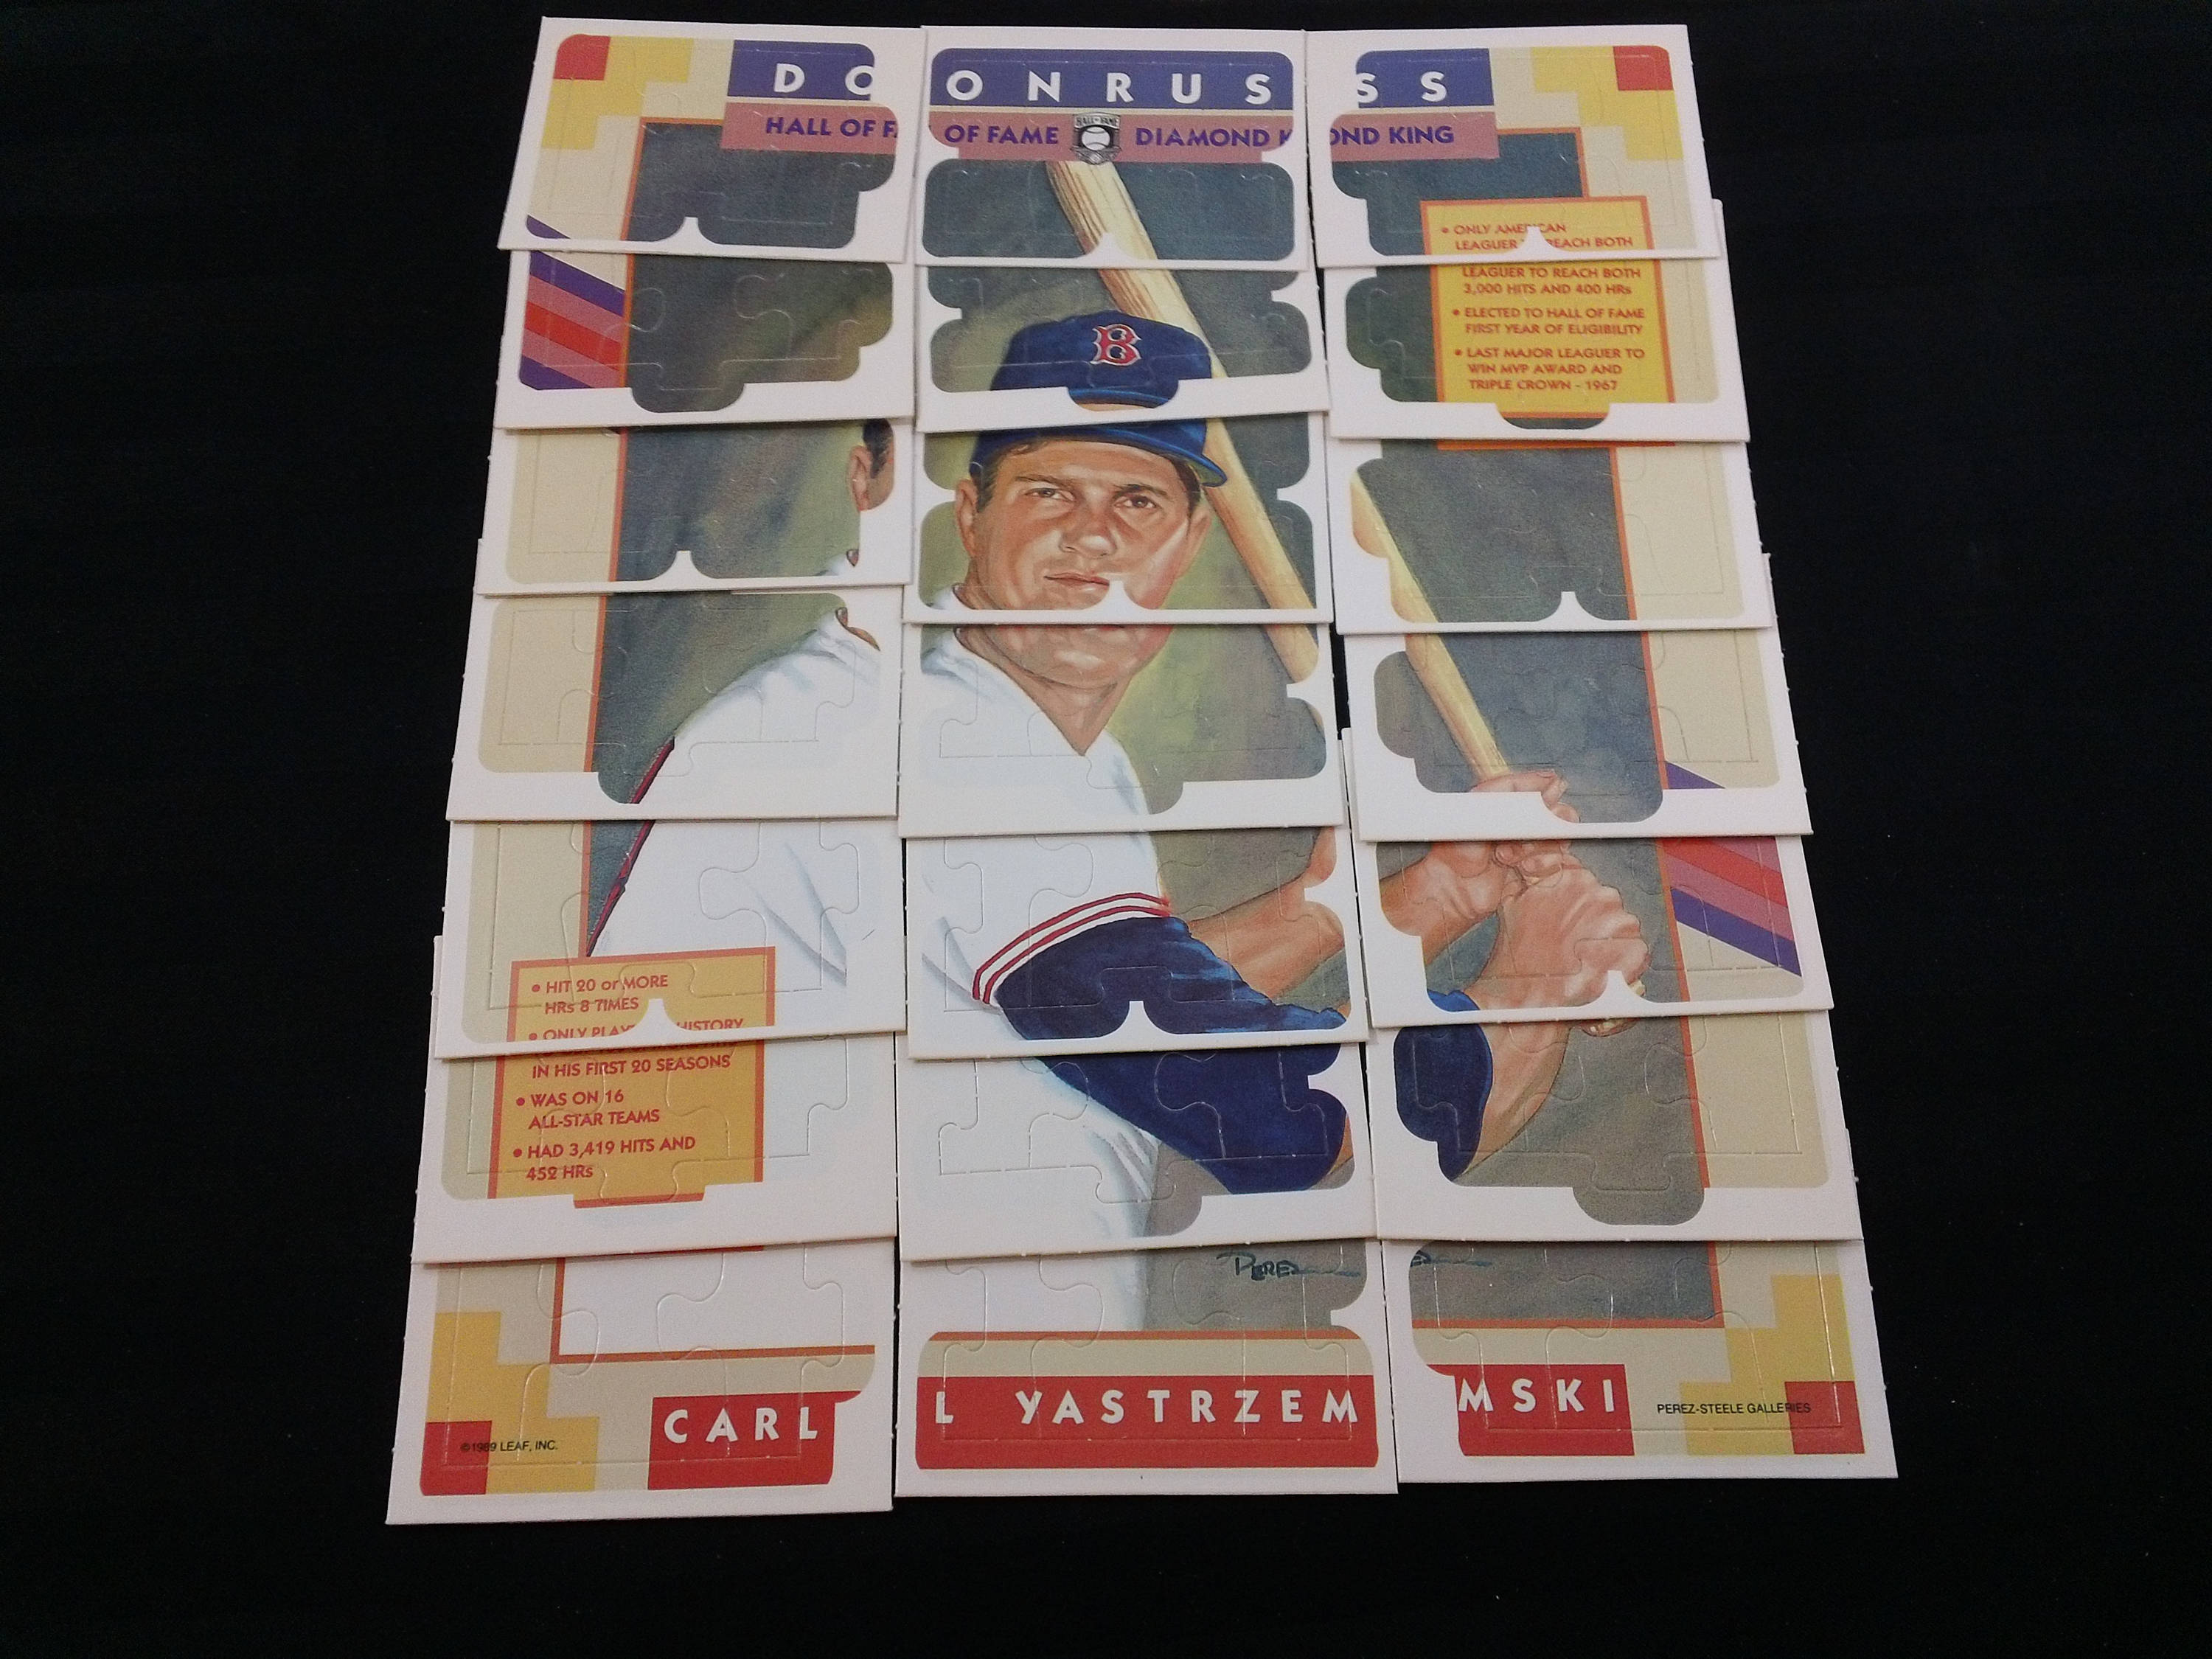 Baseball MO VAUGHN Boston Red Sox Large 8x10 Card 1998 Donruss 